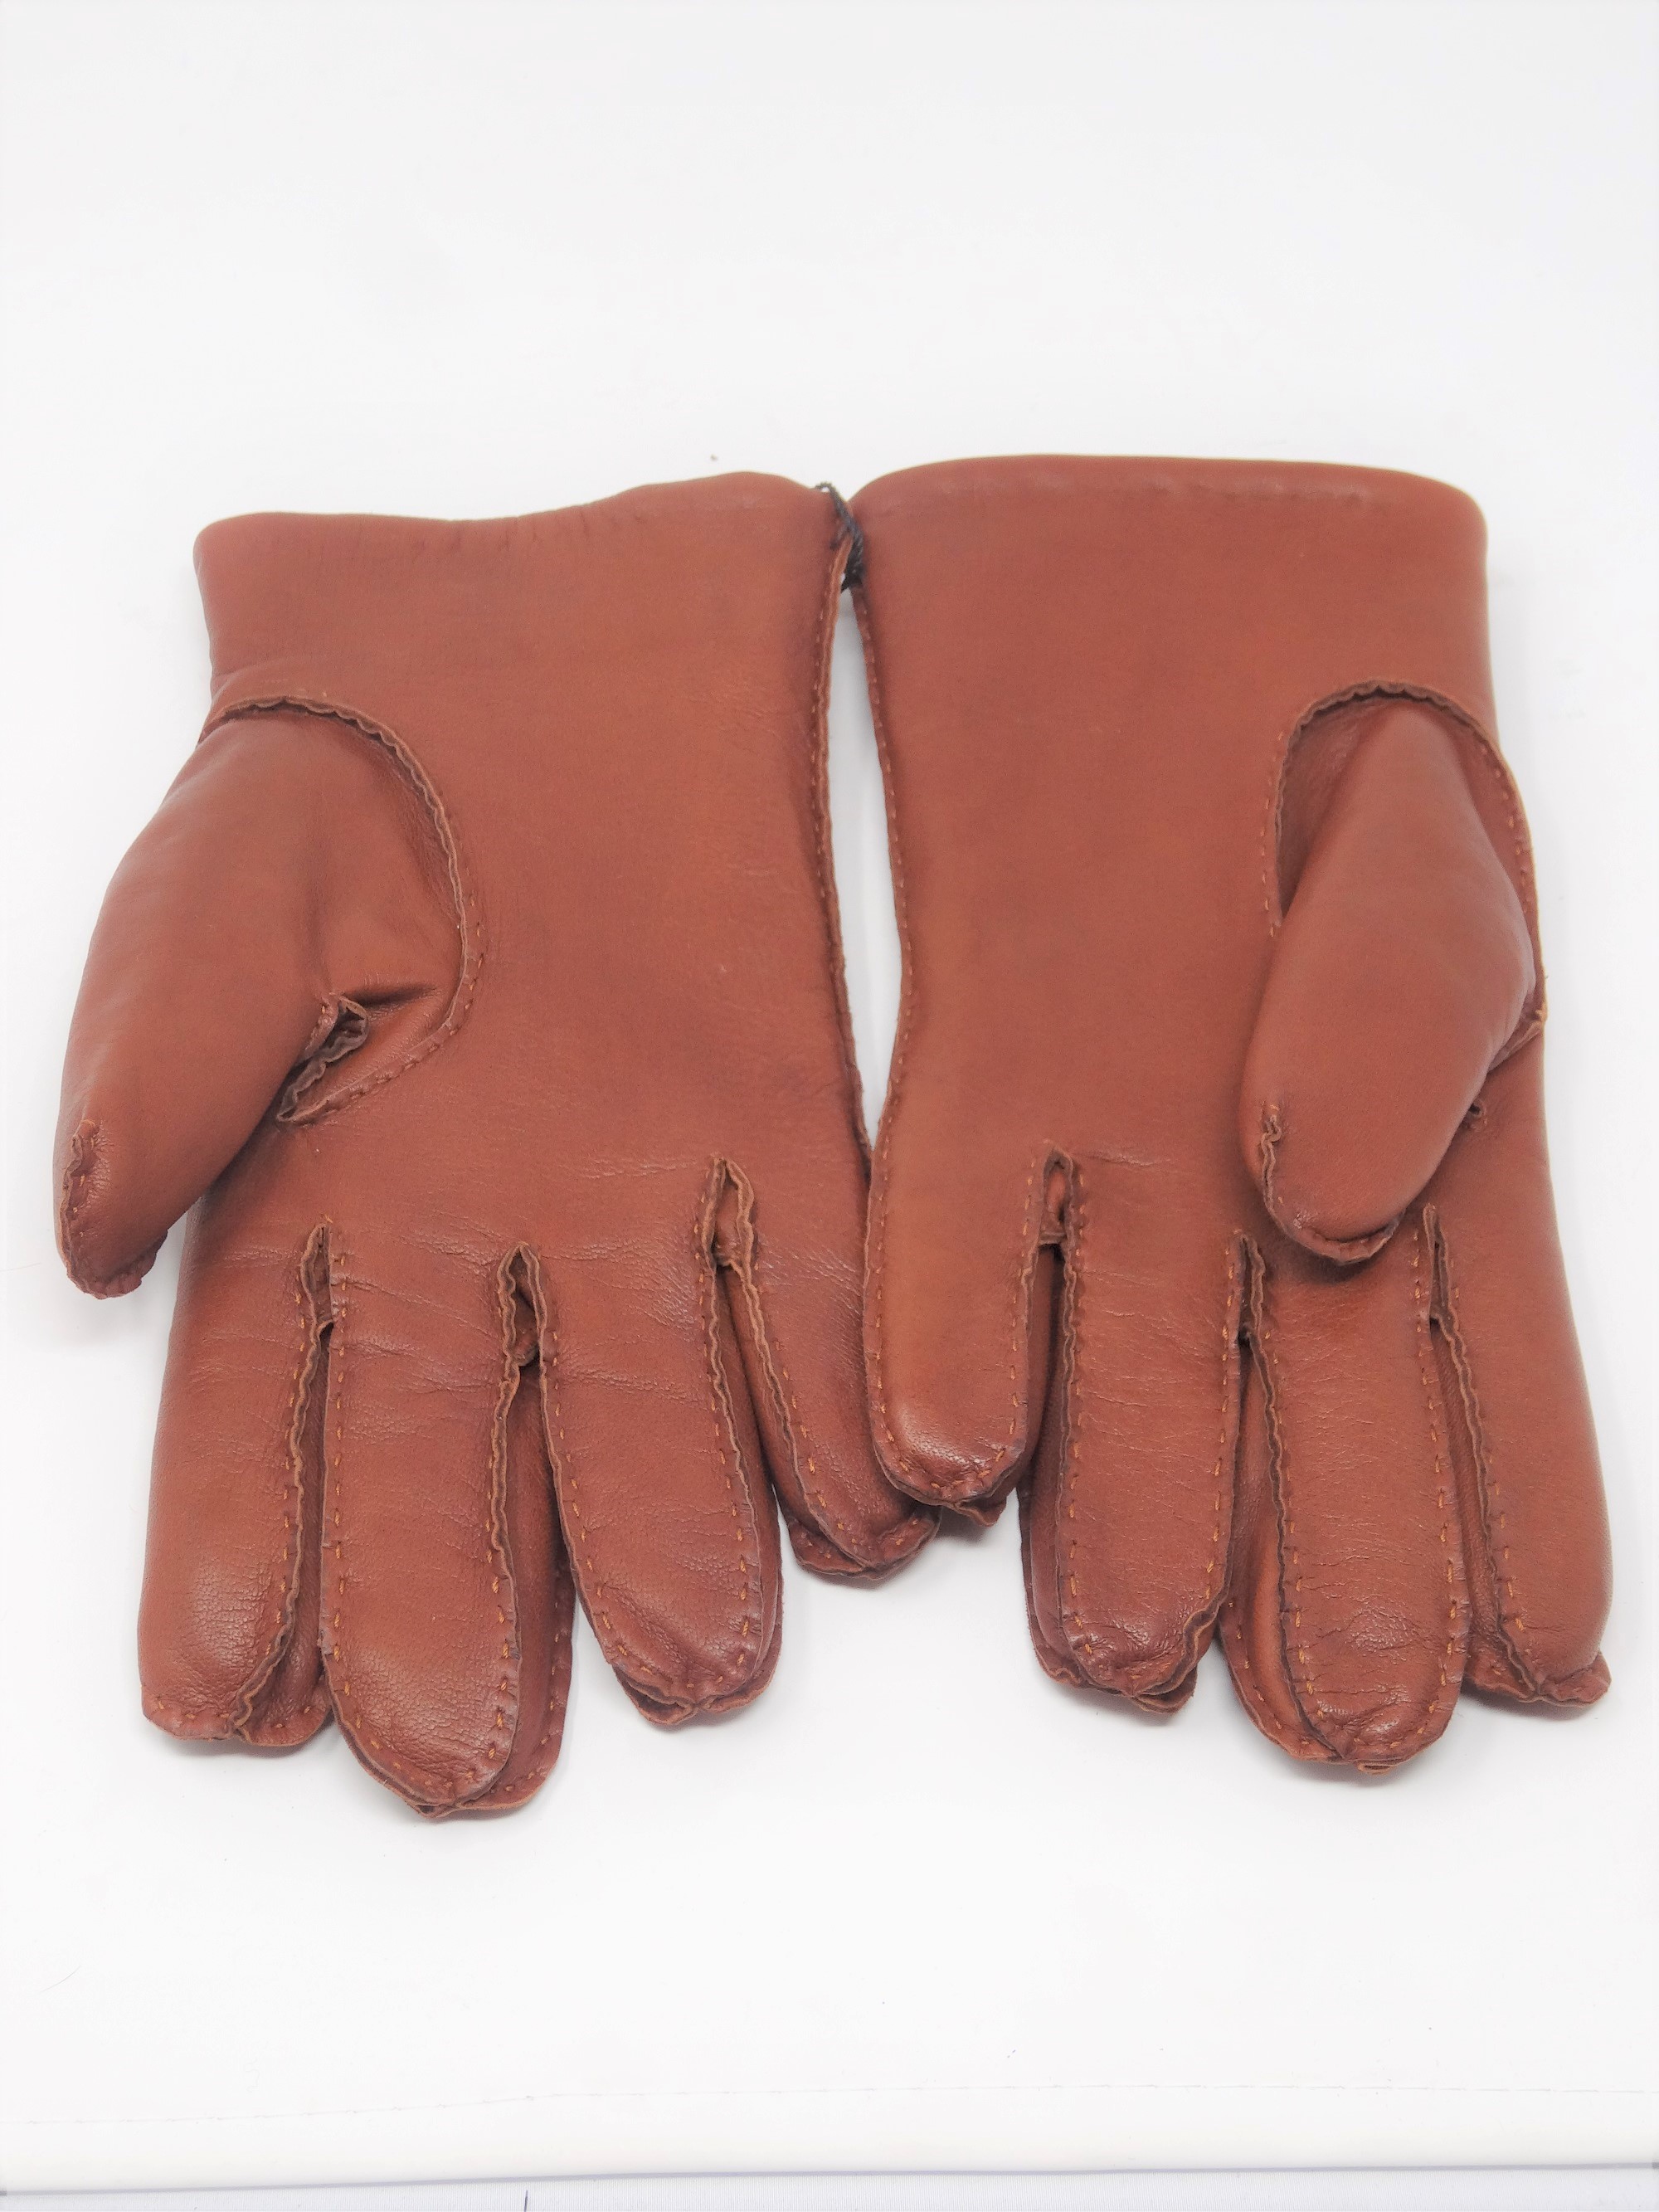 English gloves